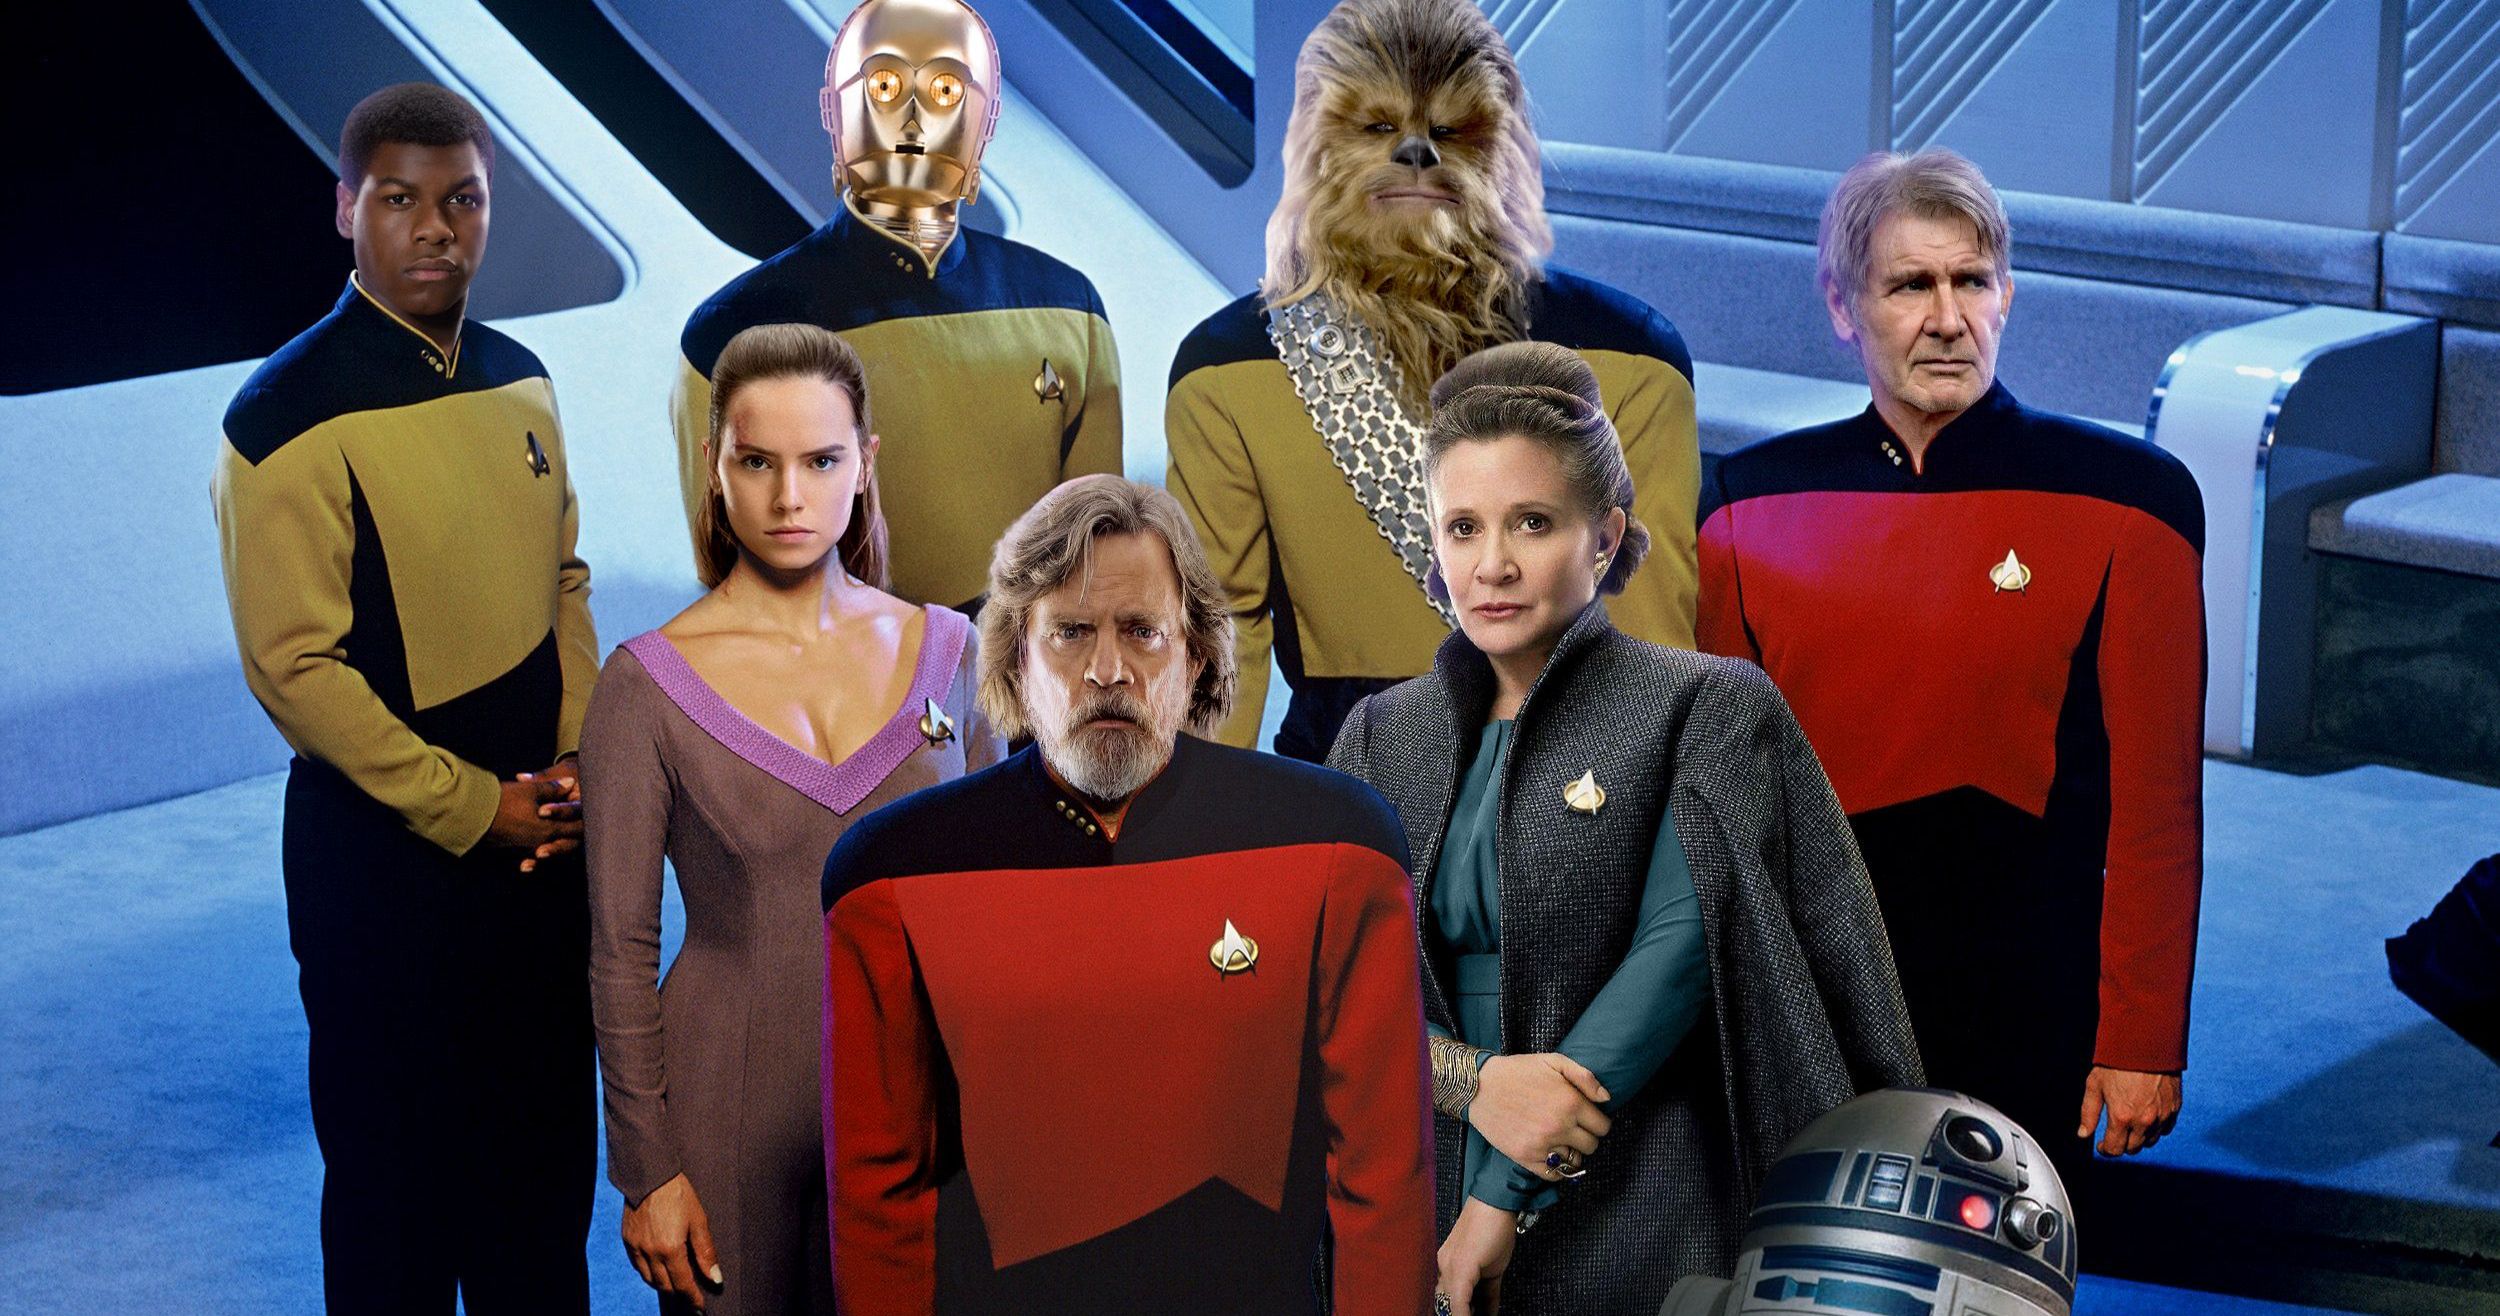 Patrick Stewart Fantasizes About A Star Trek Meets Star Wars Crossover